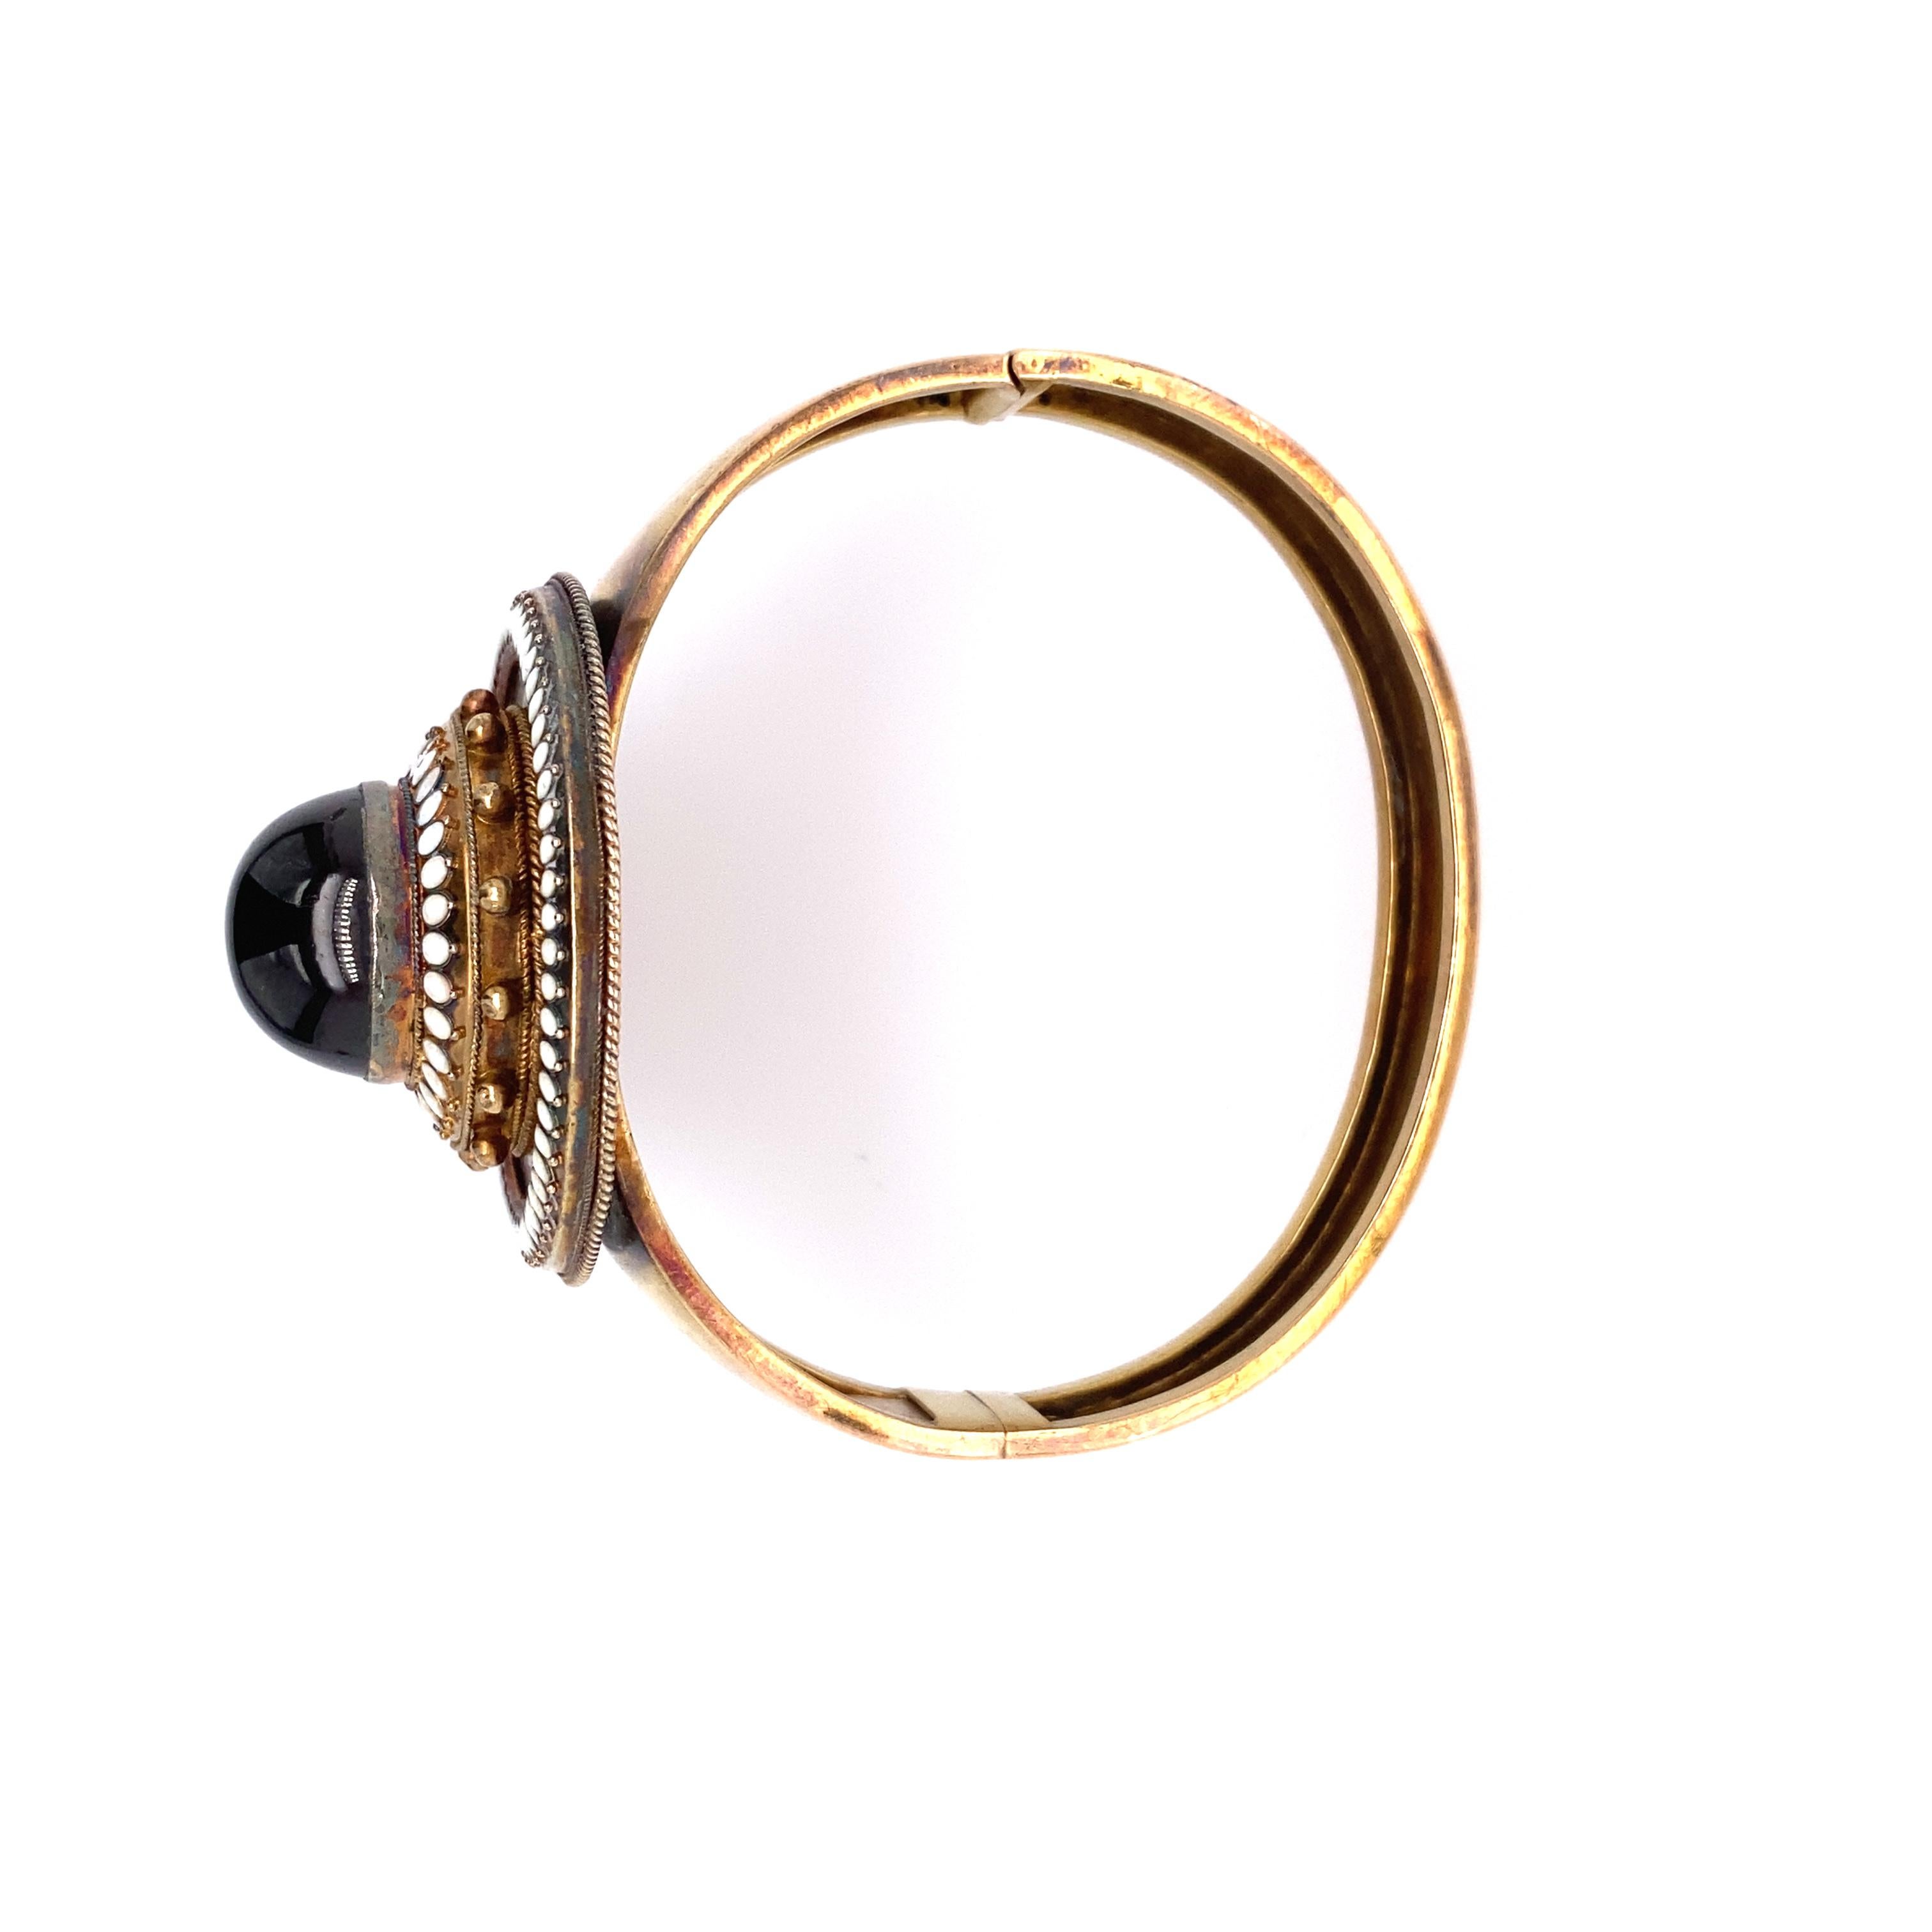 Victorian Era Circa 1890's. 14kt Gold White enamel and cabochon Garnet bangle bracelet. 
Total weight  17.0 dwt. Measurement of bracelet wrist is 6.50